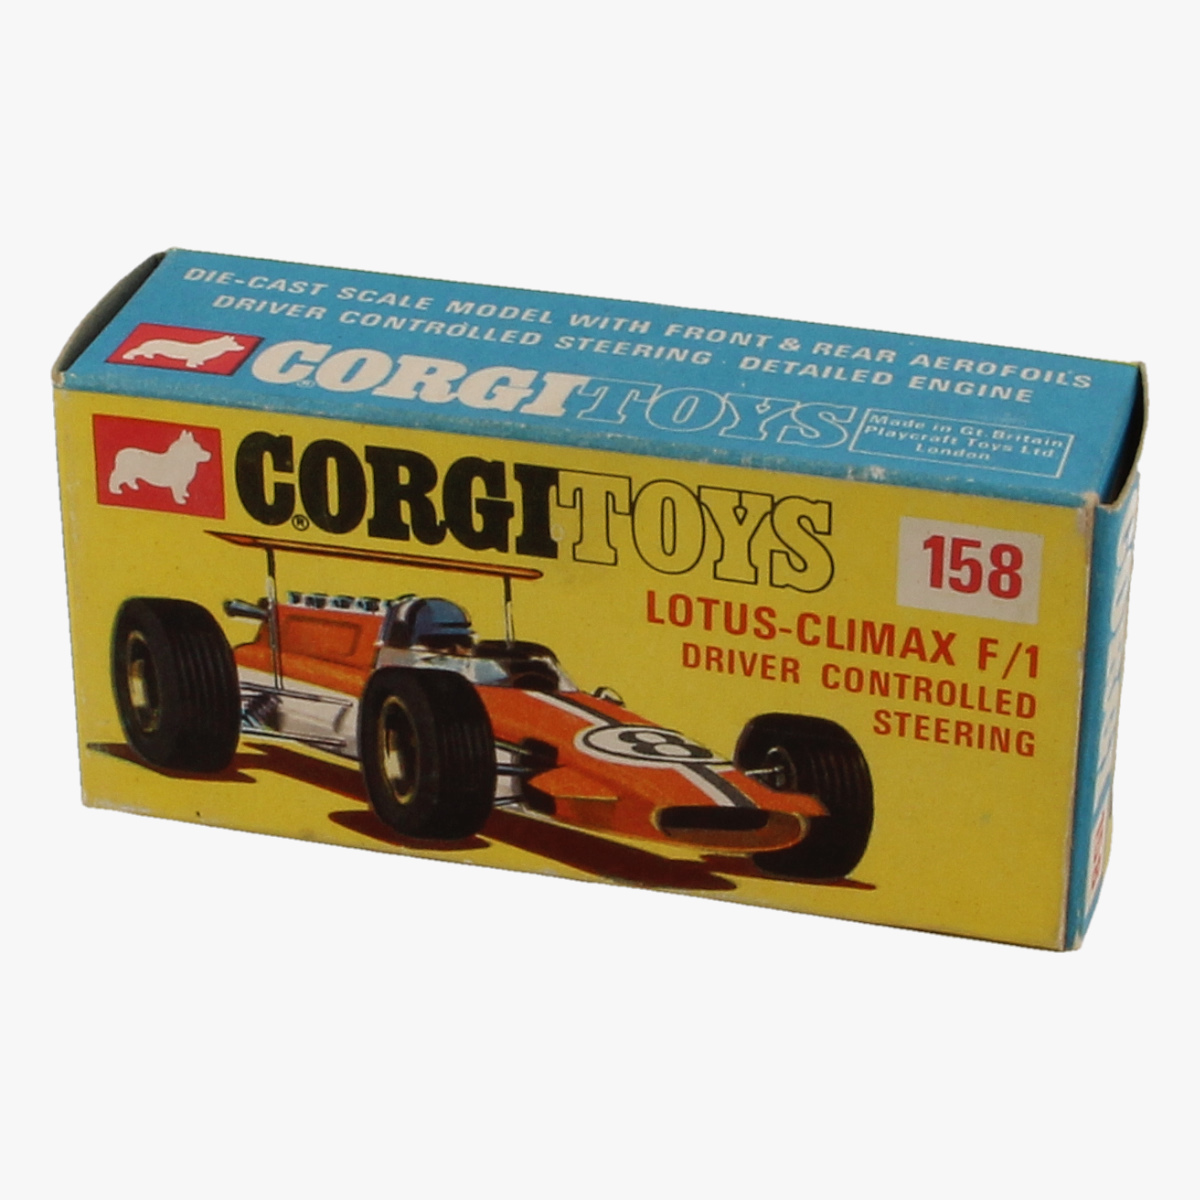 Afbeeldingen van Corgi Toys. Lotus Climax F/1 Nr. 158